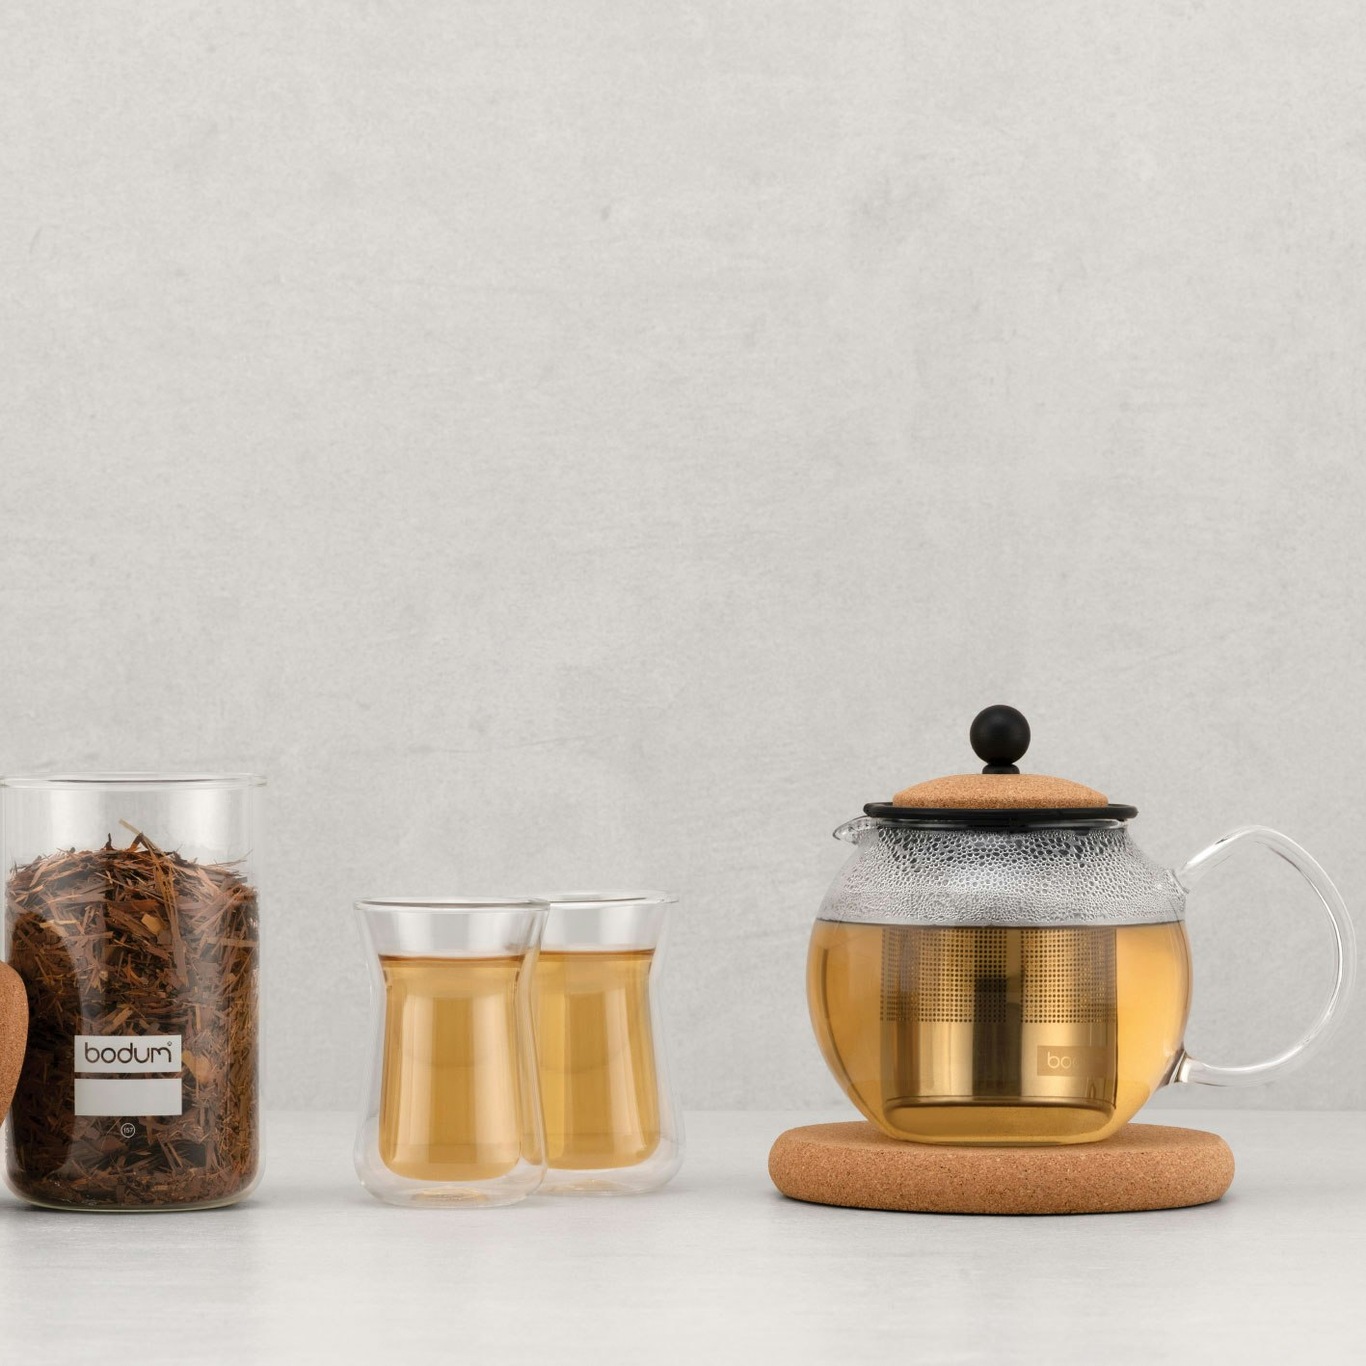 https://royaldesign.com/image/2/bodum-melior-double-walled-teacups-2-pack-10-cl-2?w=800&quality=80